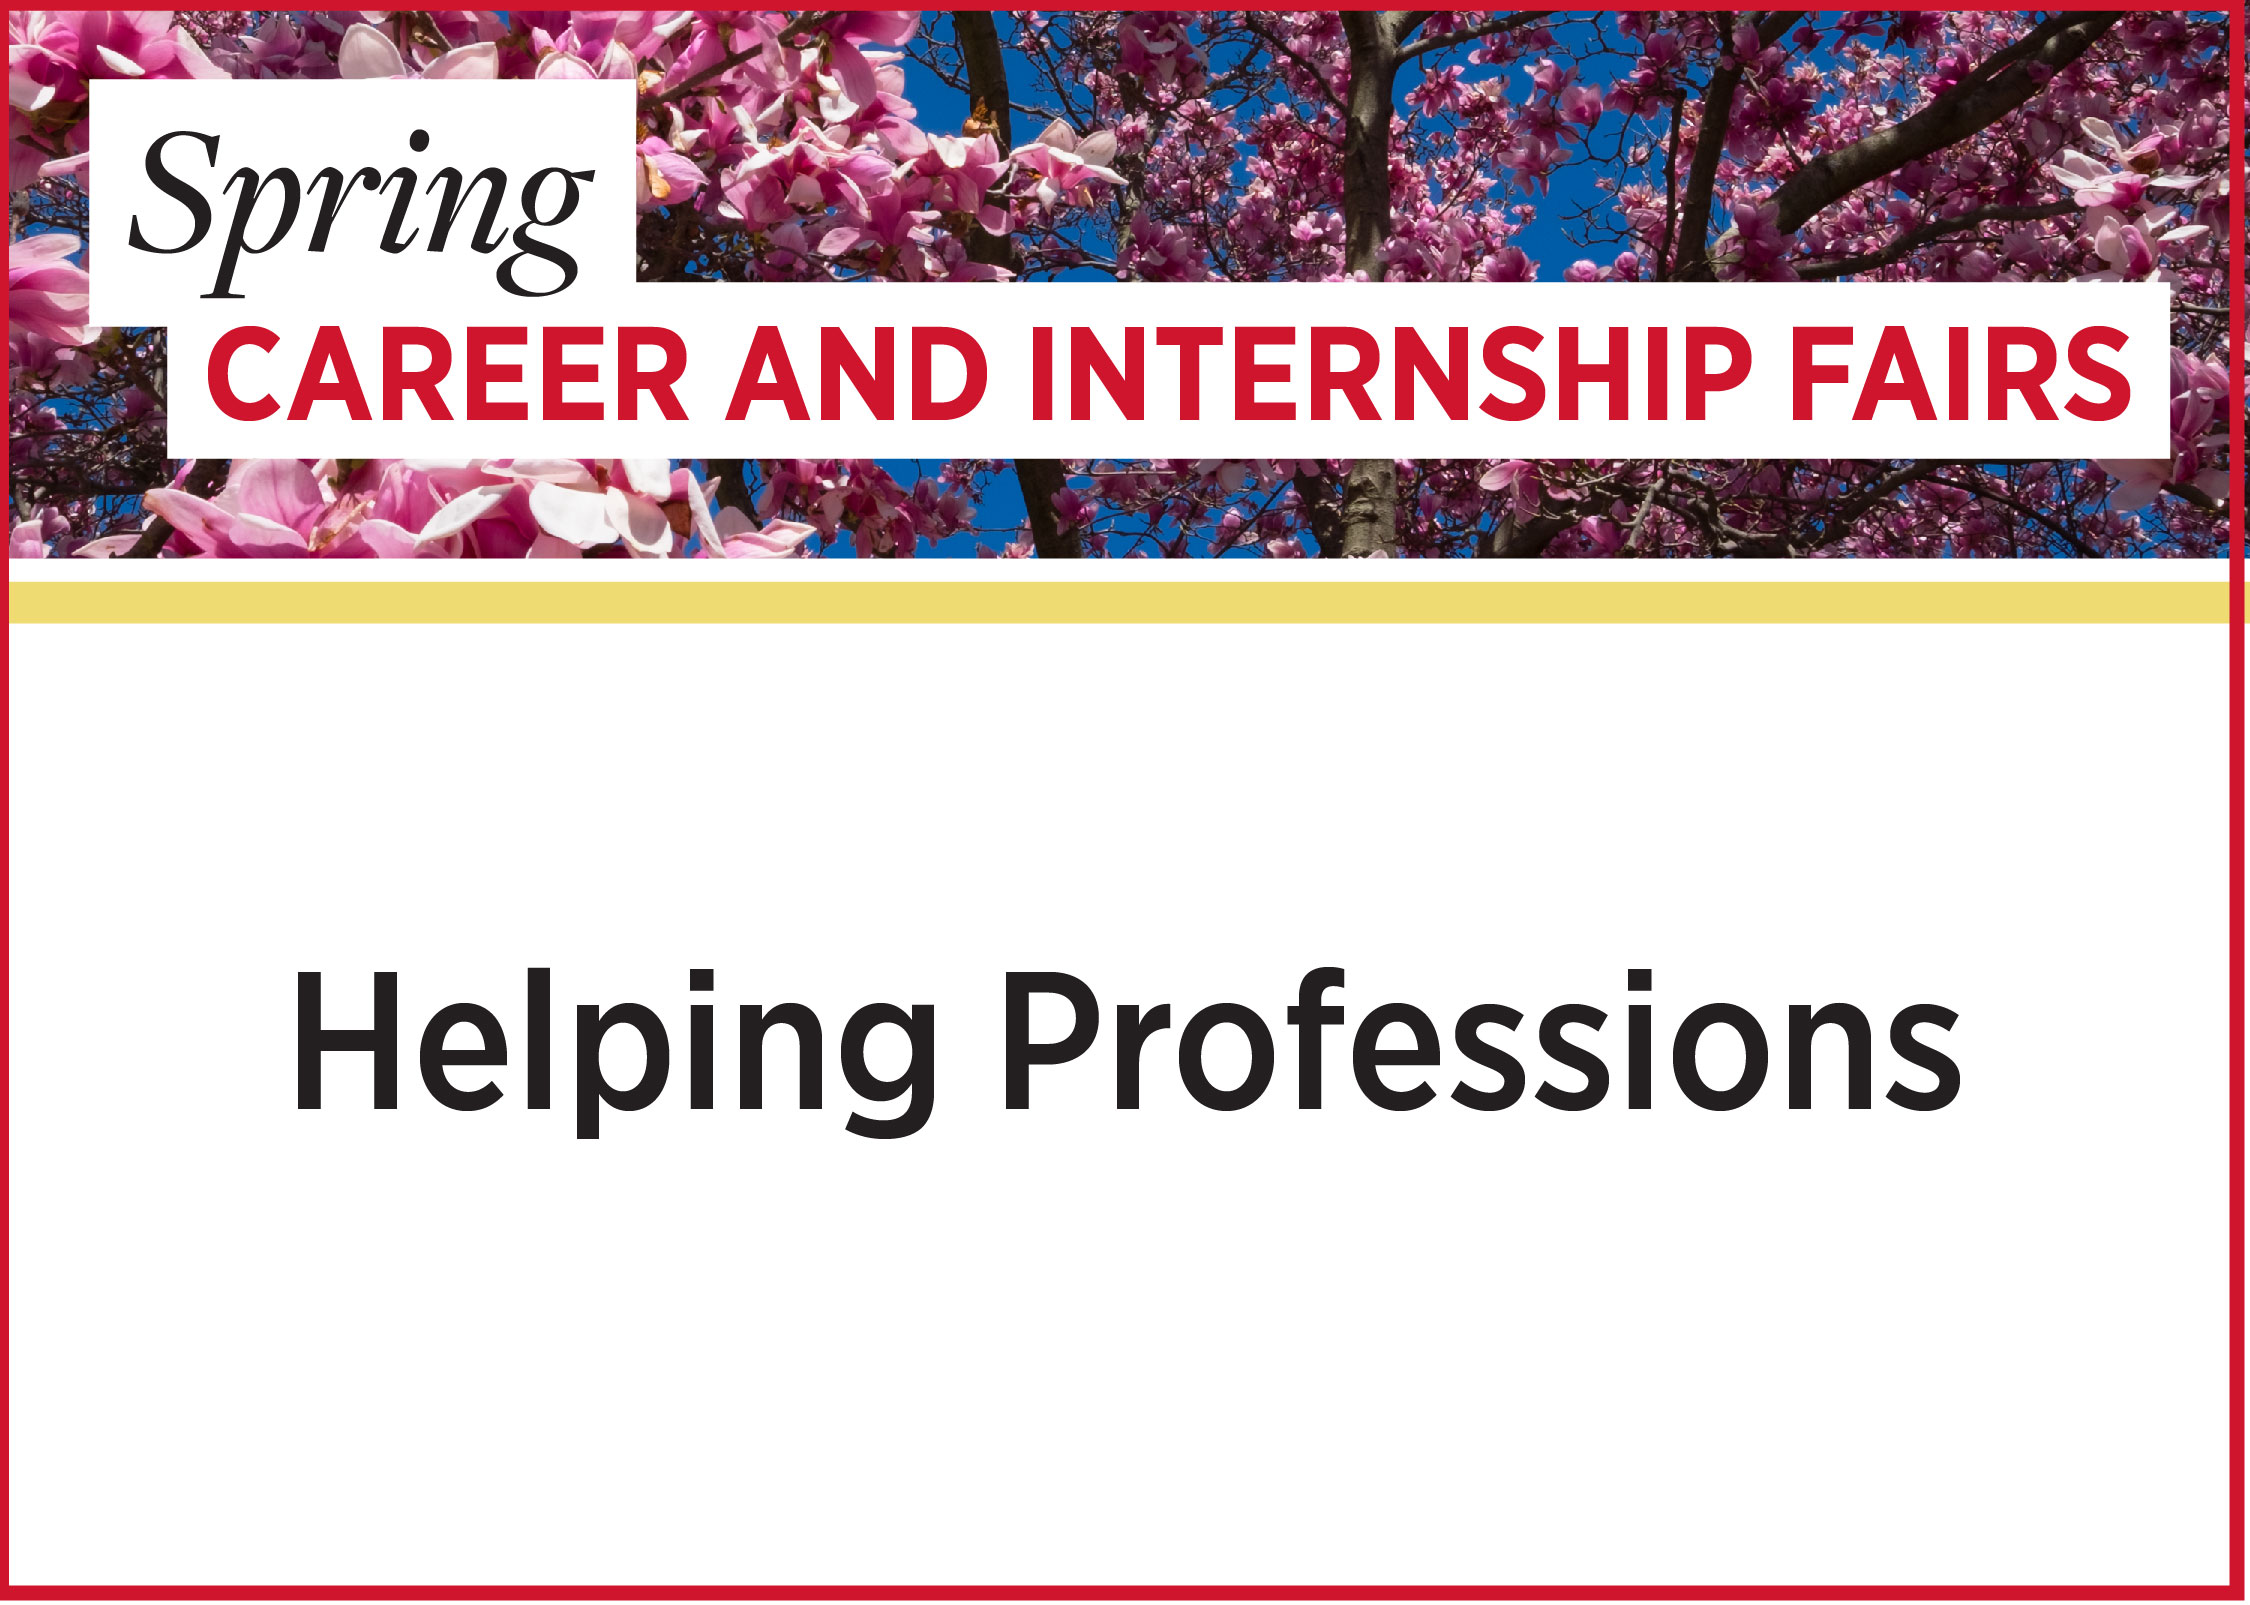 Spring Career and Internship Fair - Helping Professions